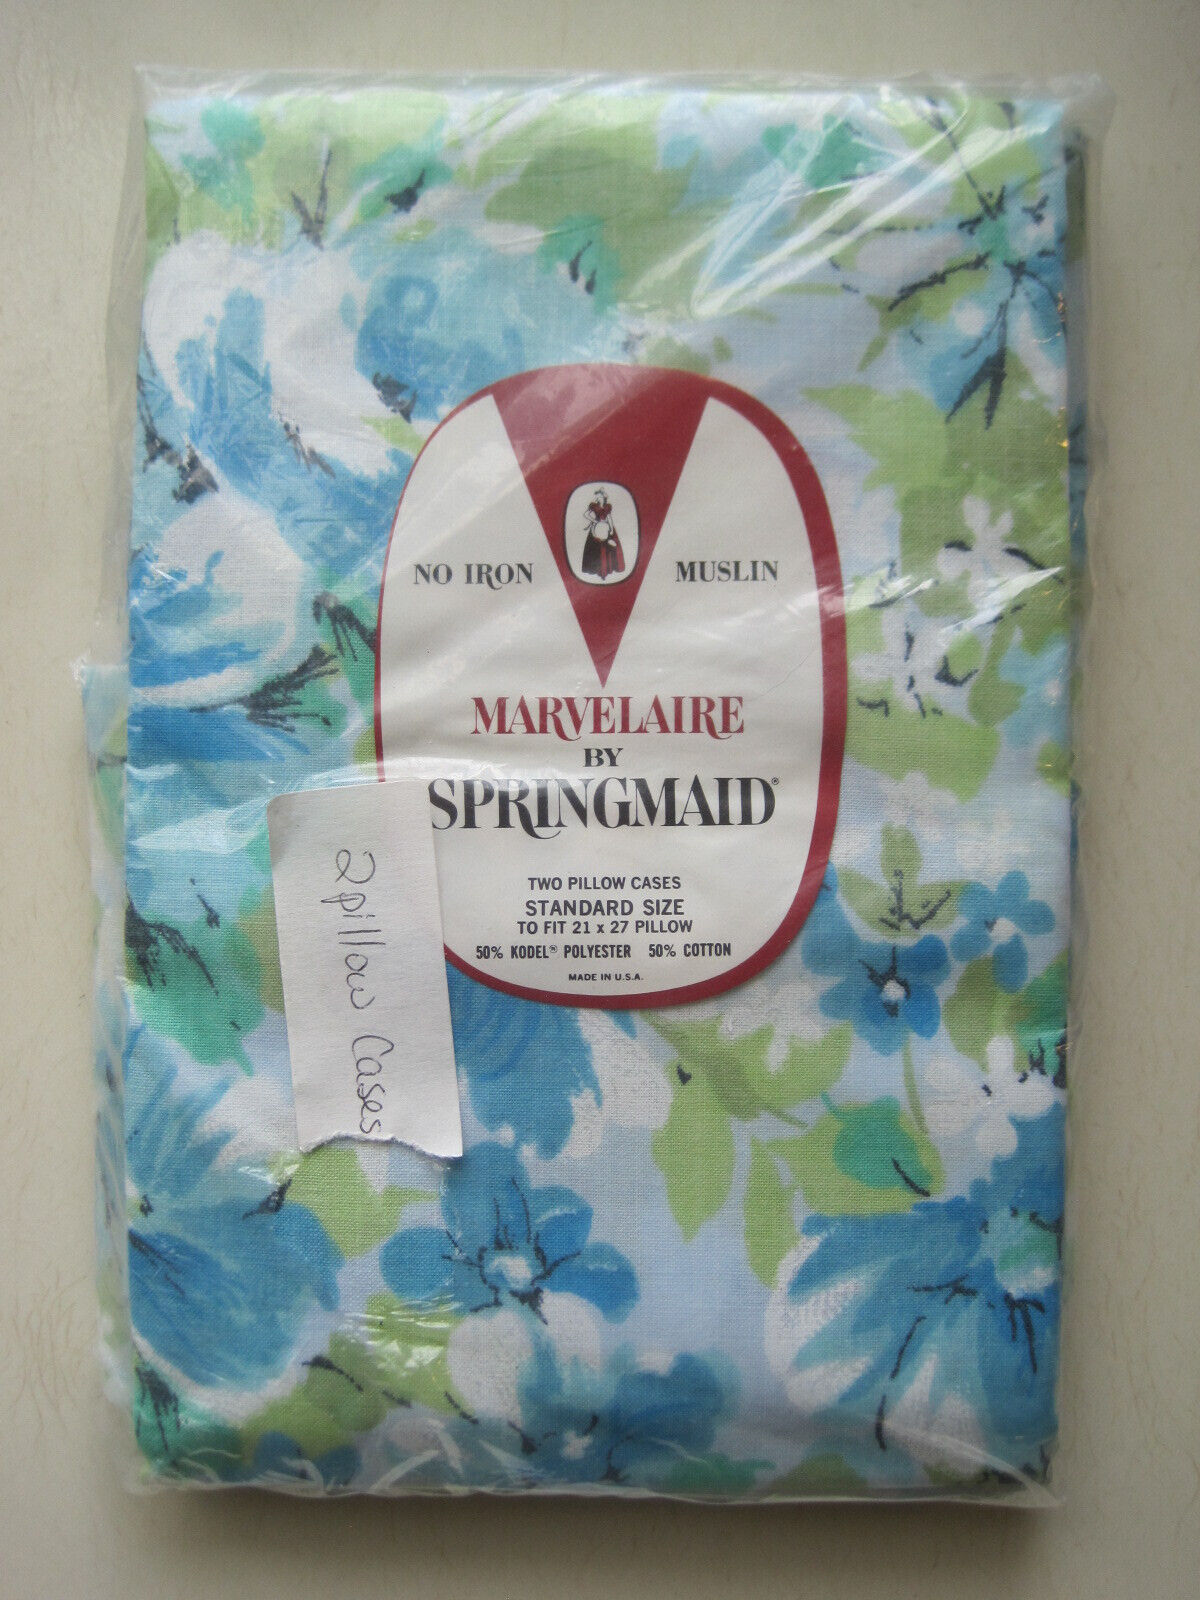 2 NEW Vintage Standard Pillowcases Springmaid Marvelaire No-Iron Muslin Pink